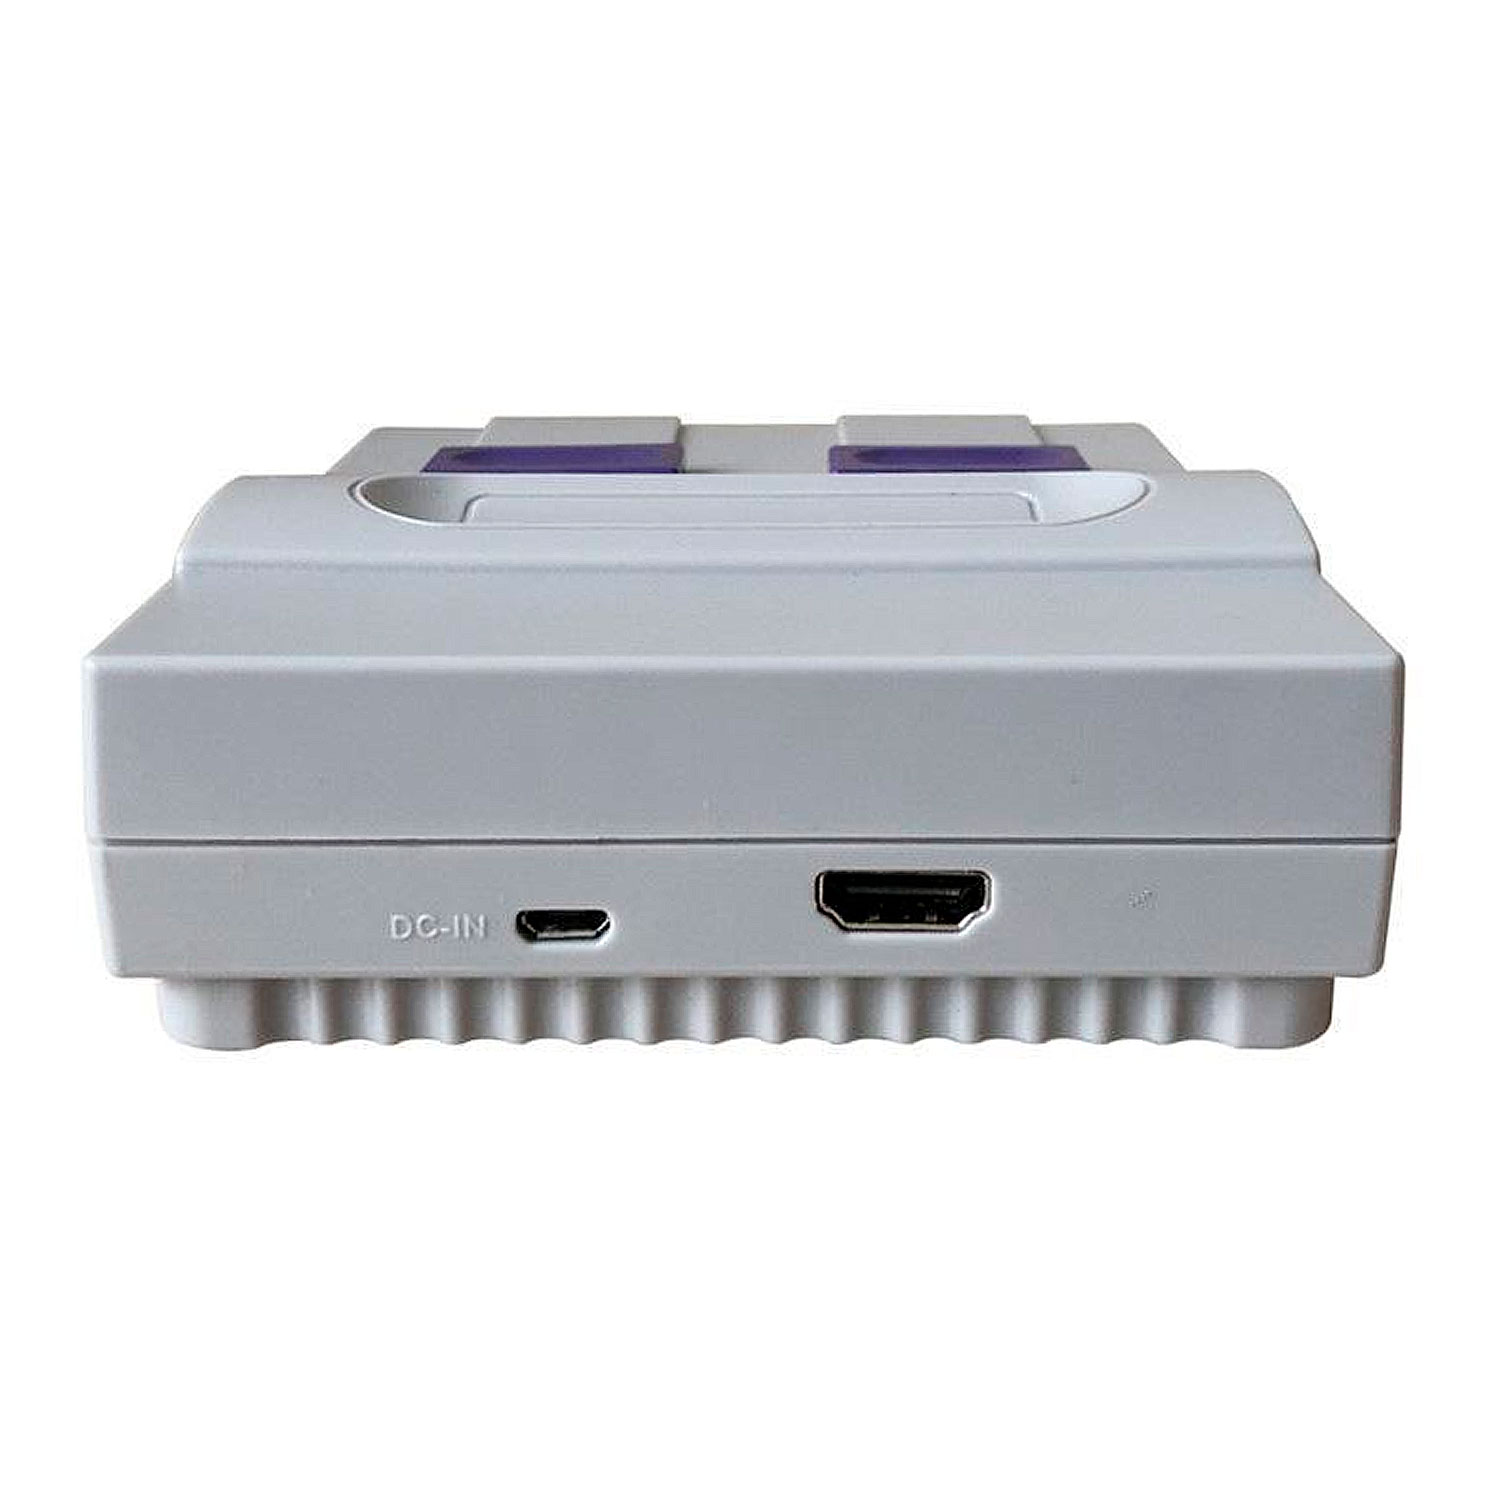 Console Super Mini Classic SN-03 821 Jogos 2 Controles Sem Fio - Cinza